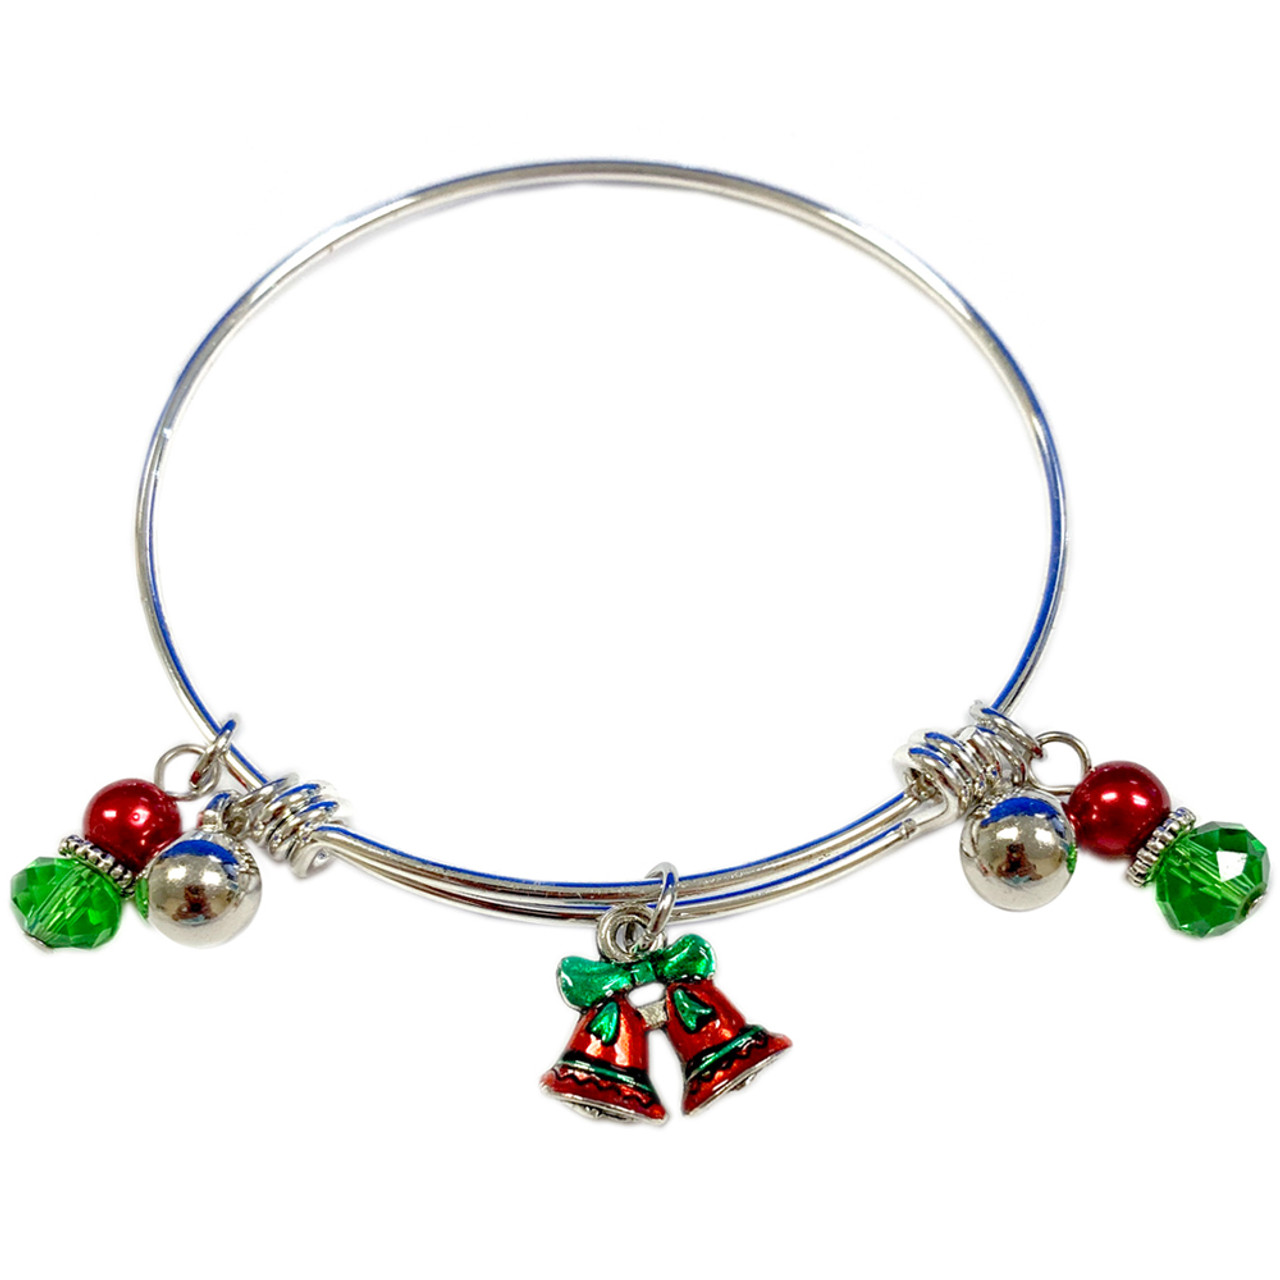 Painted Jingle Bell Charm Adjustable Bangle Bracelet